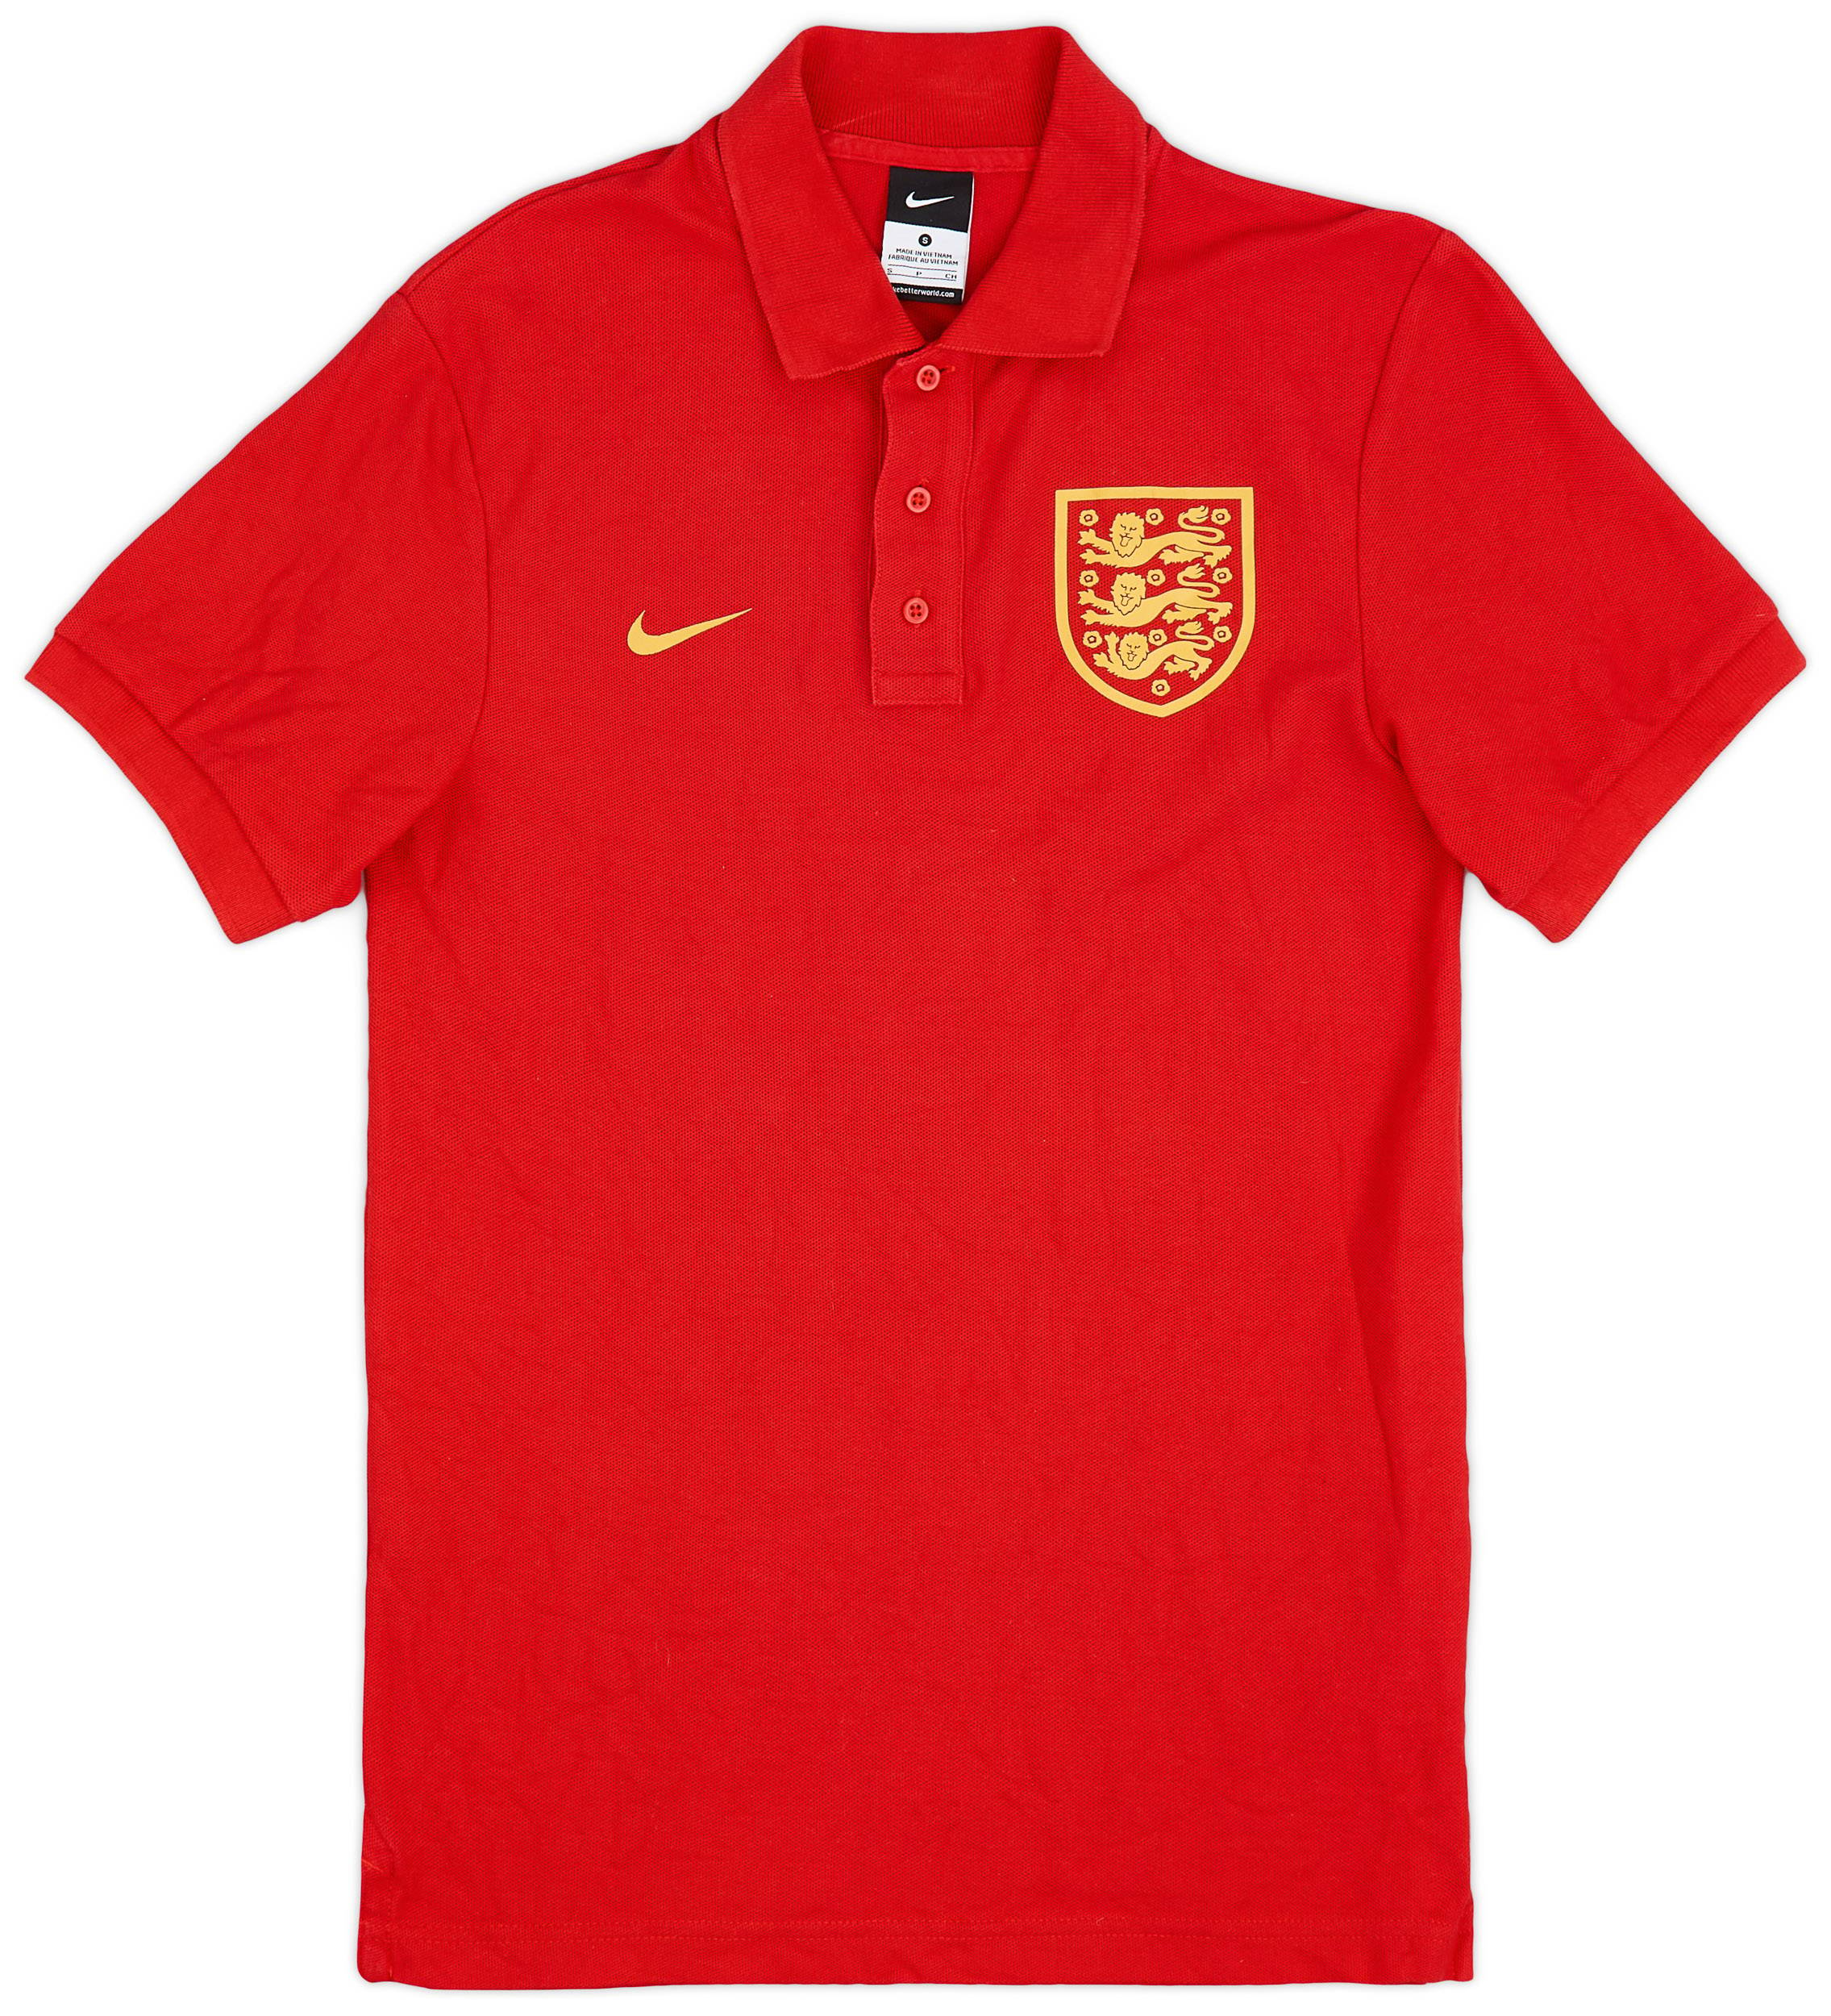 2014-15 England Nike Polo Shirt - 9/10 - (S)